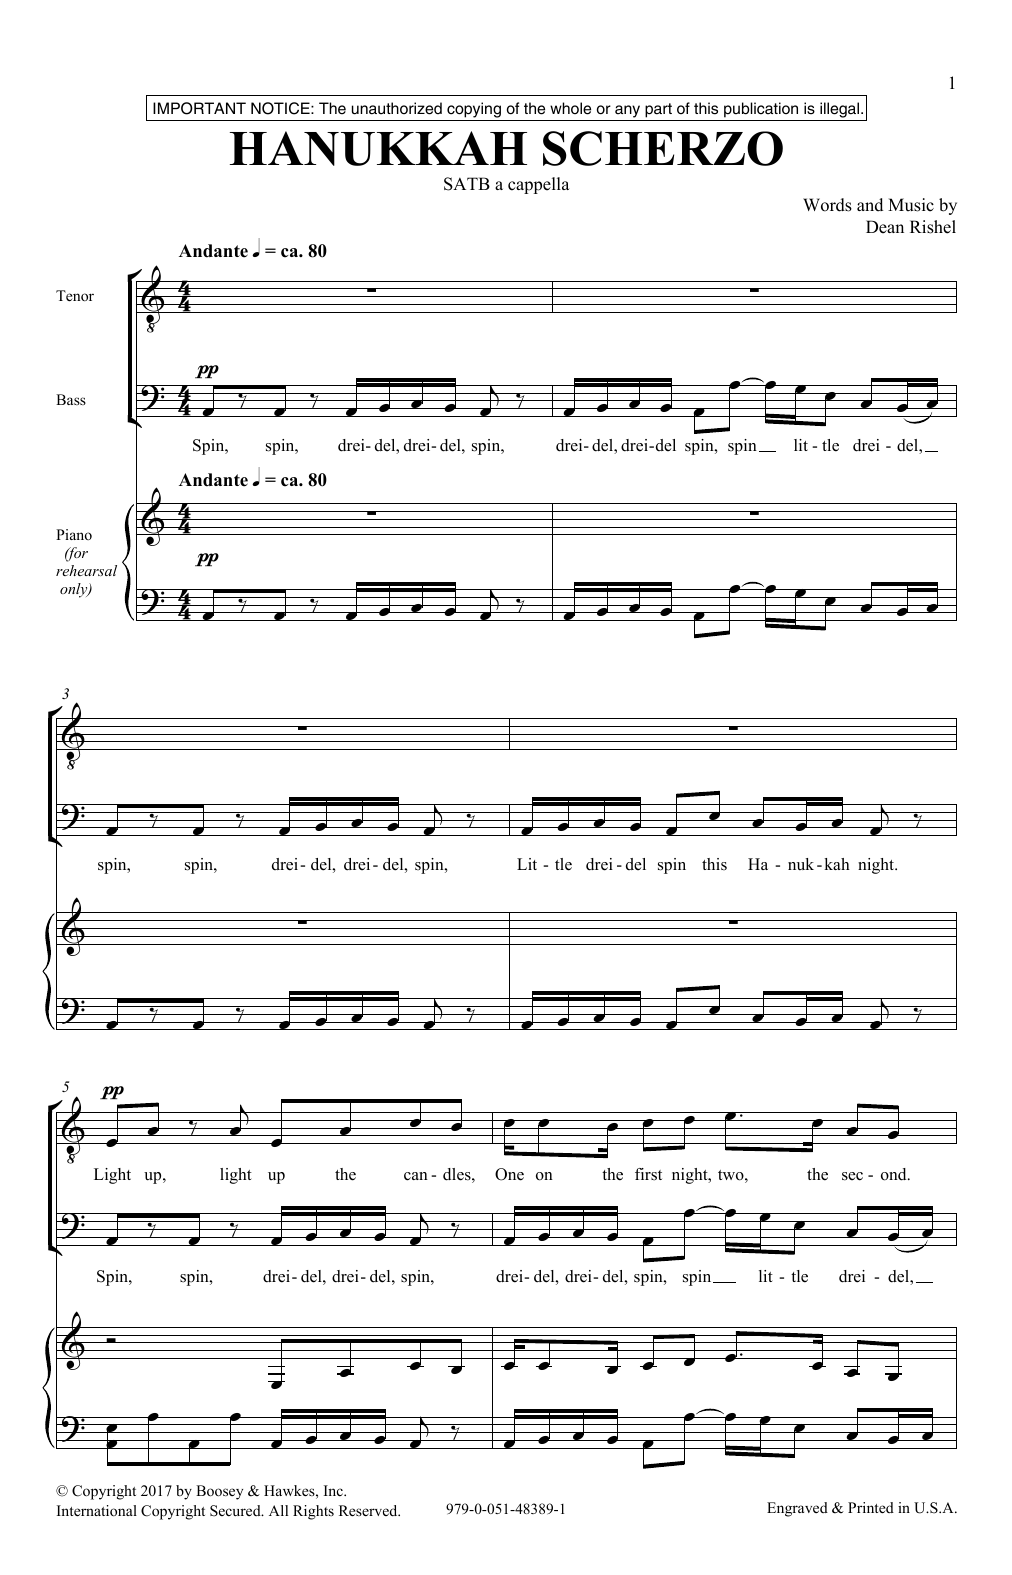 Dean Rishel Hanukkah Scherzo sheet music notes and chords arranged for SATB Choir